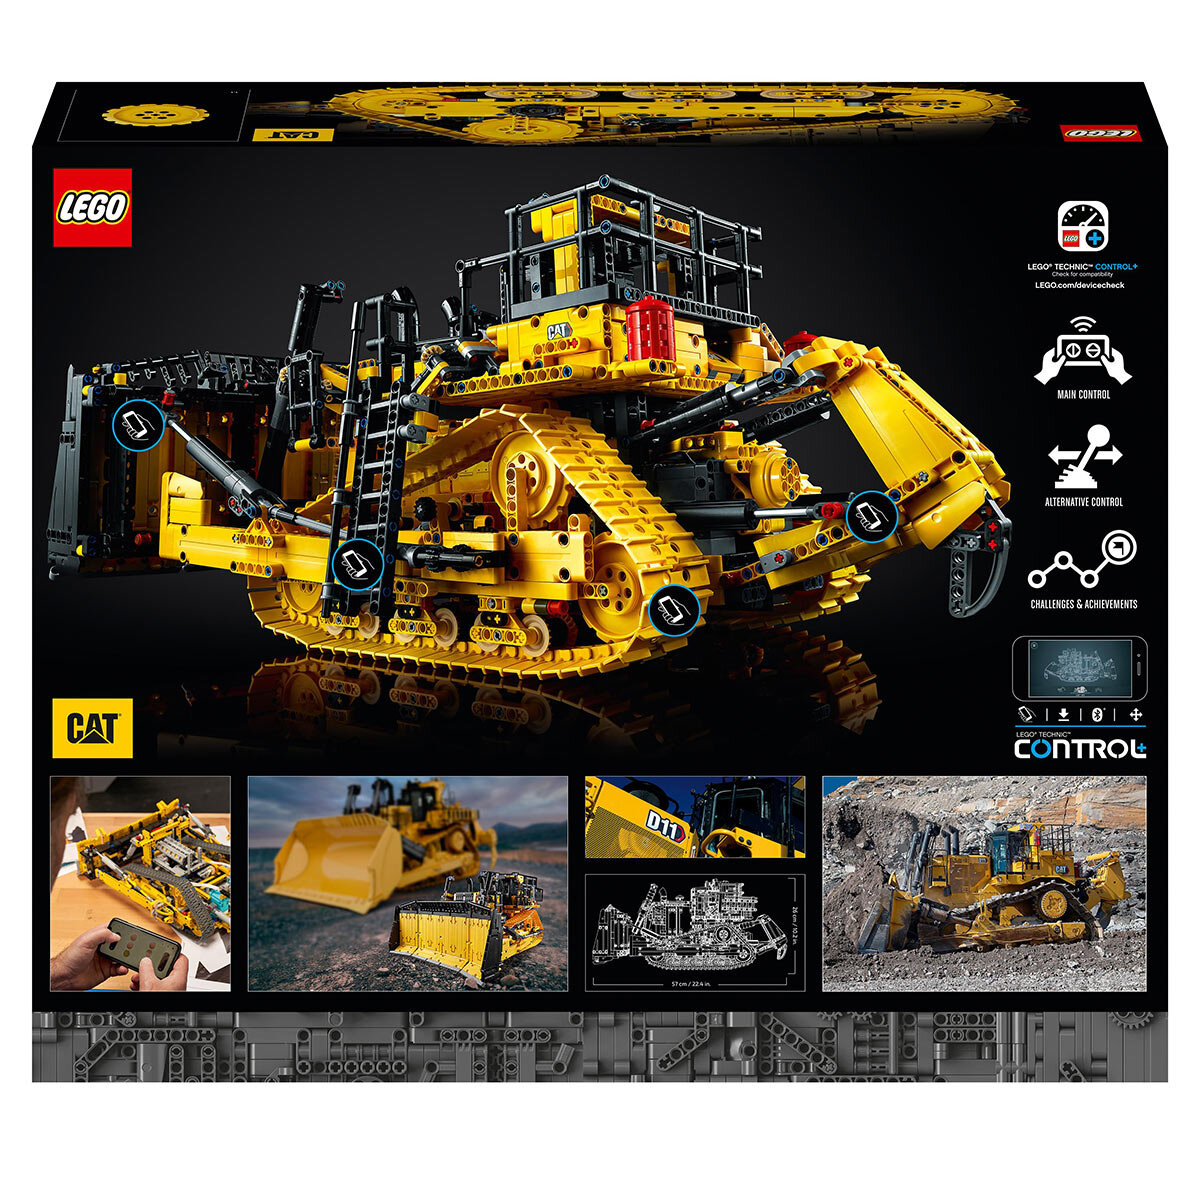 Buy LEGO Technic CAT Bulldozer Back of Box Image at Costco.co.uk